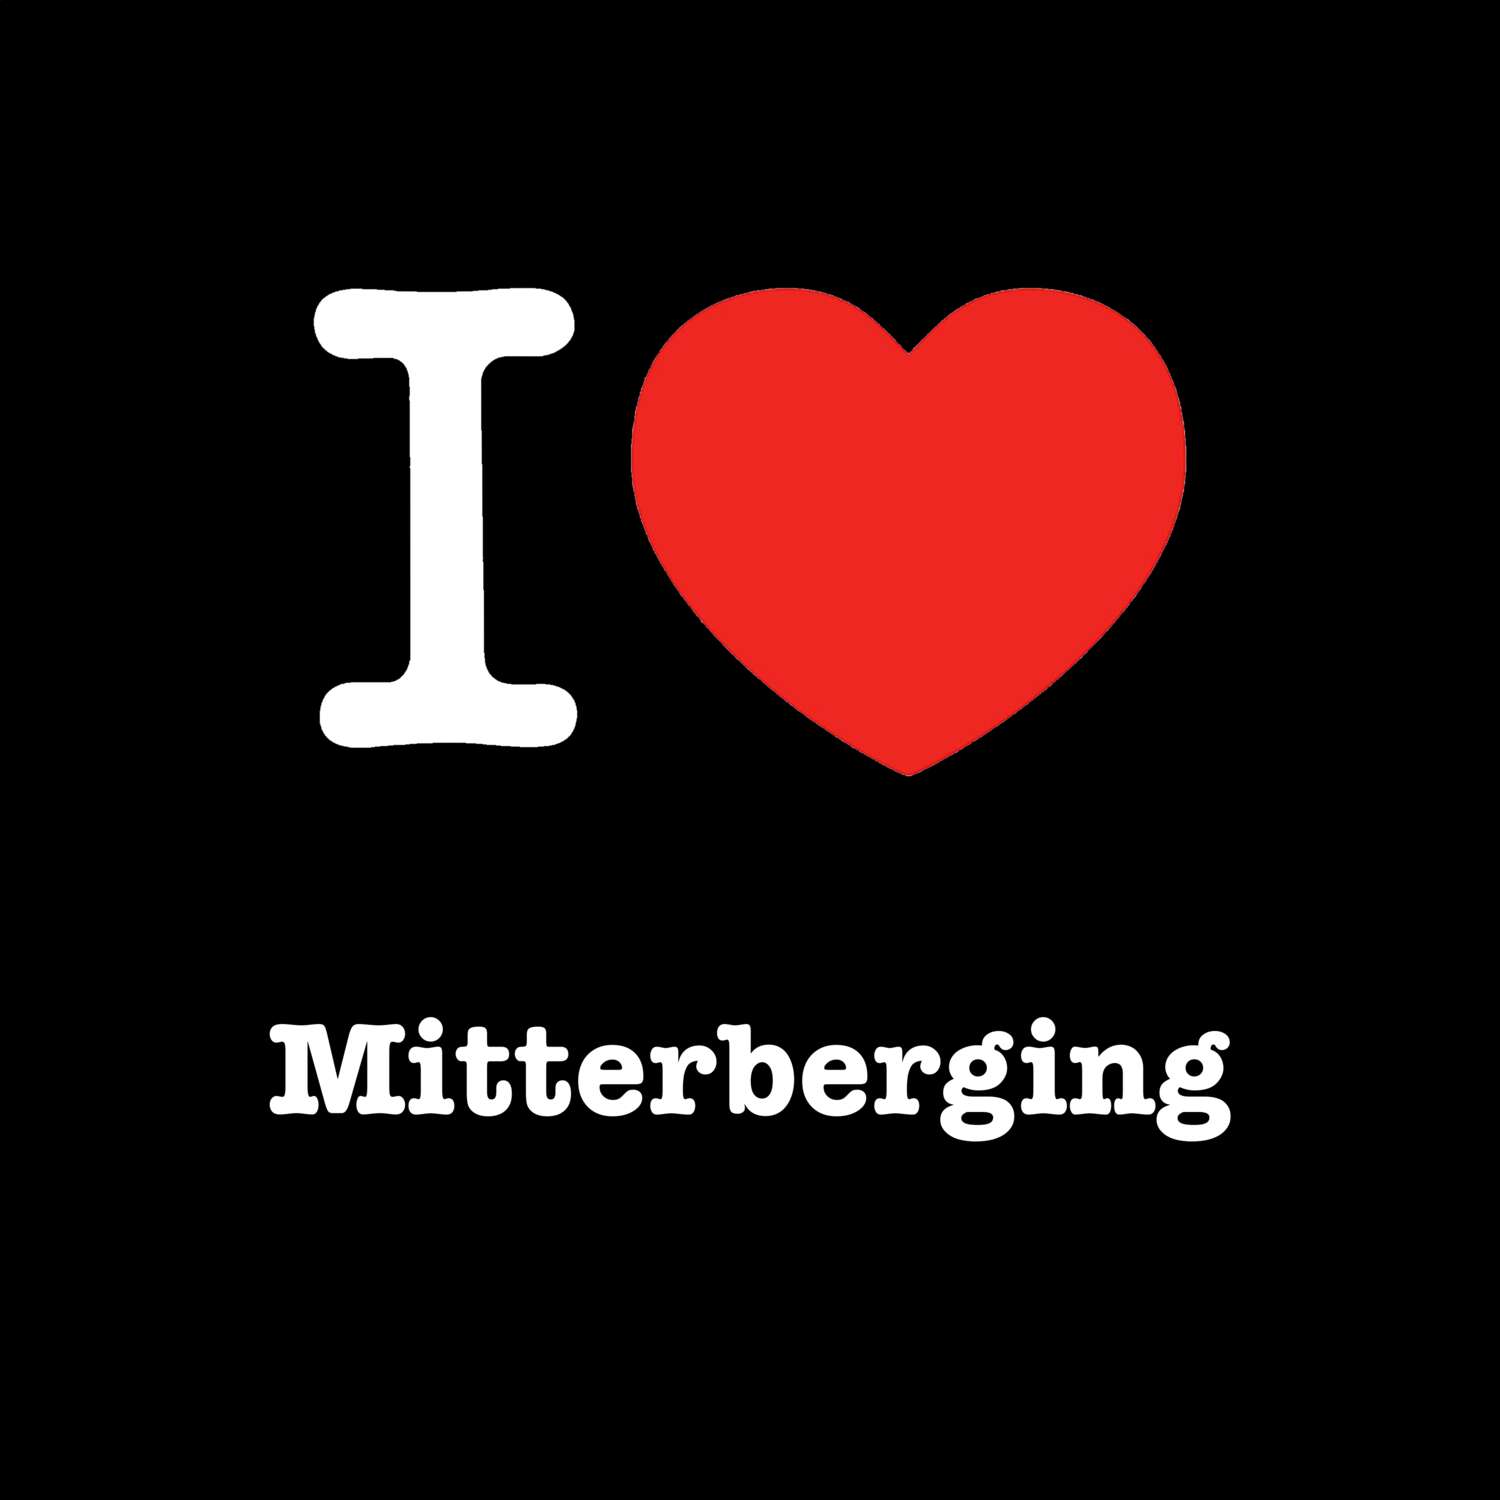 Mitterberging T-Shirt »I love«